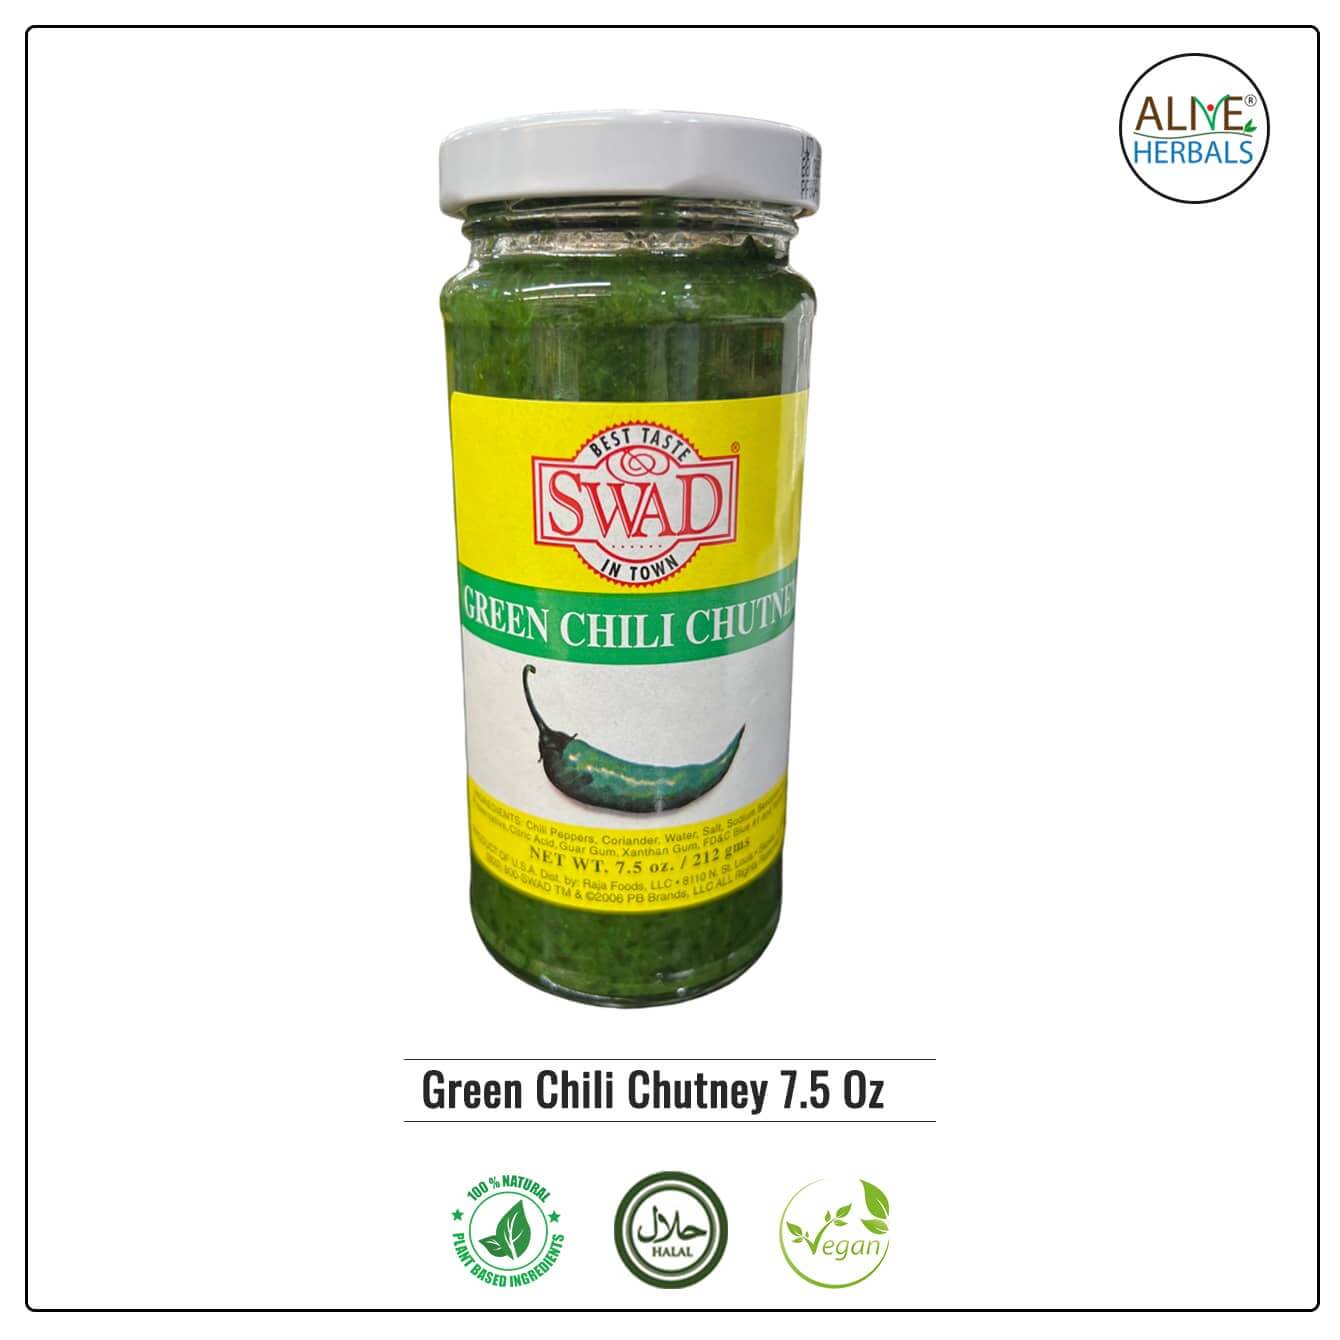 Green Chili Chutney